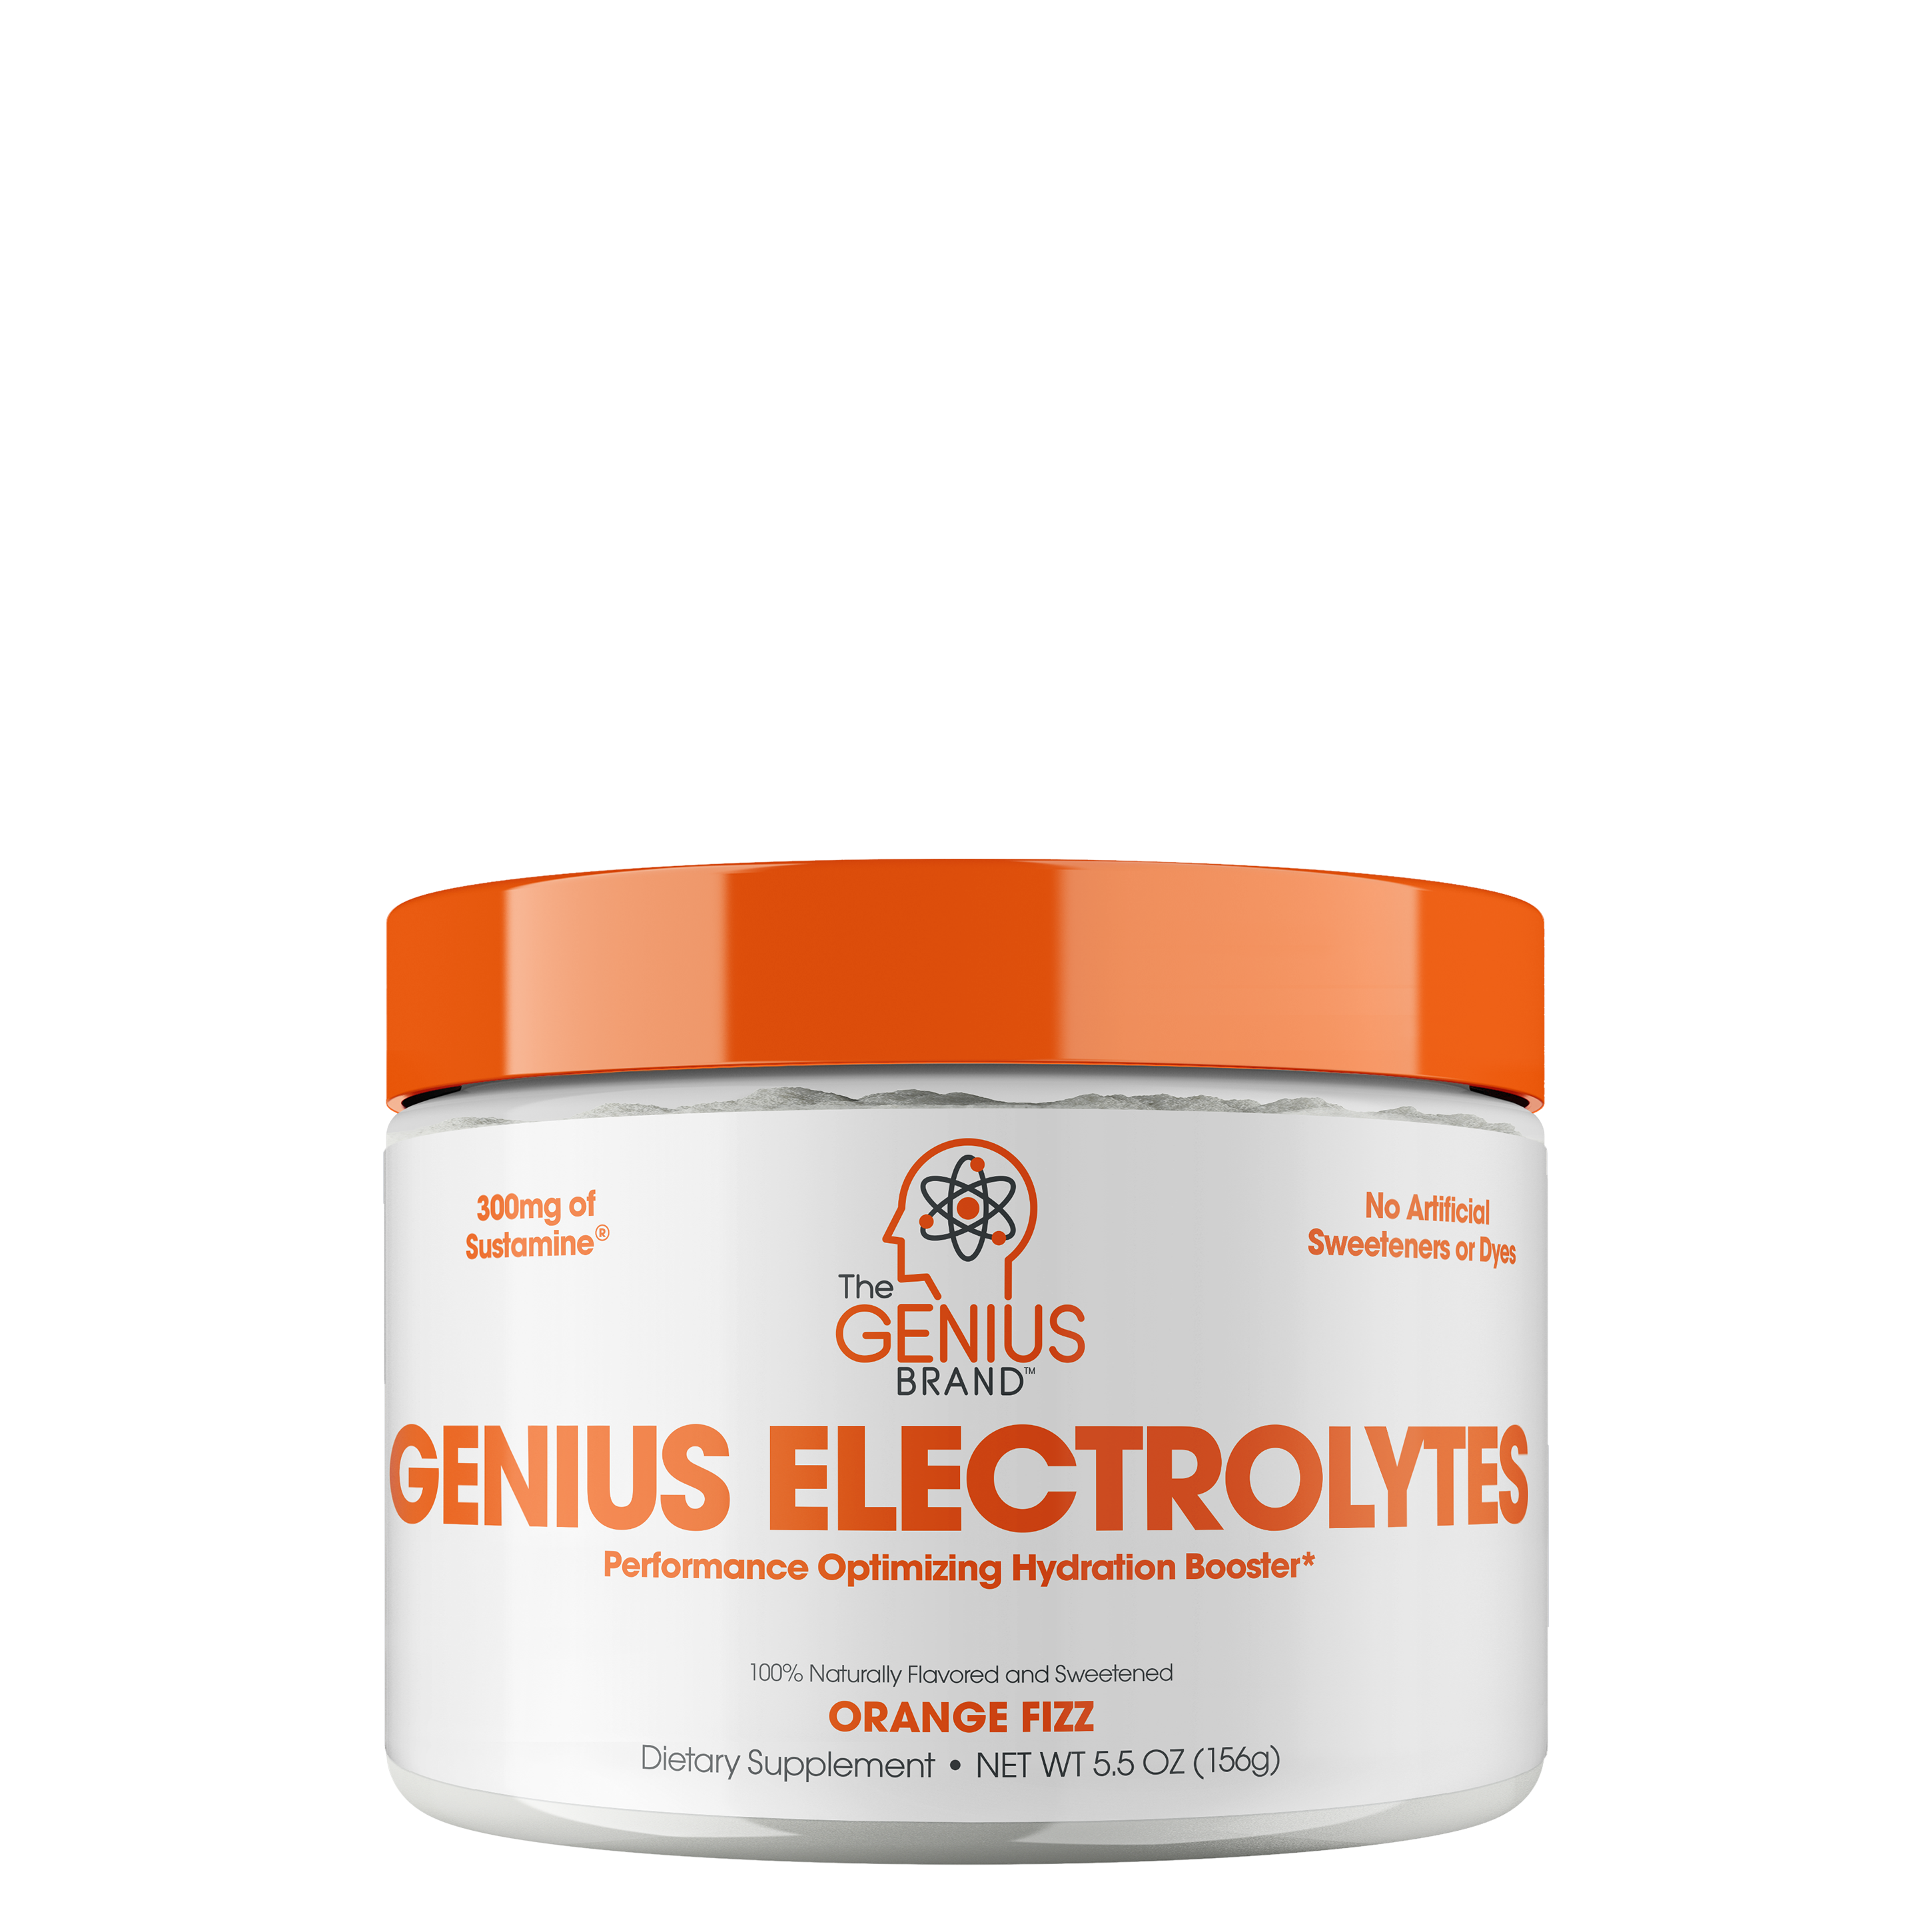 Genius Electrolytes